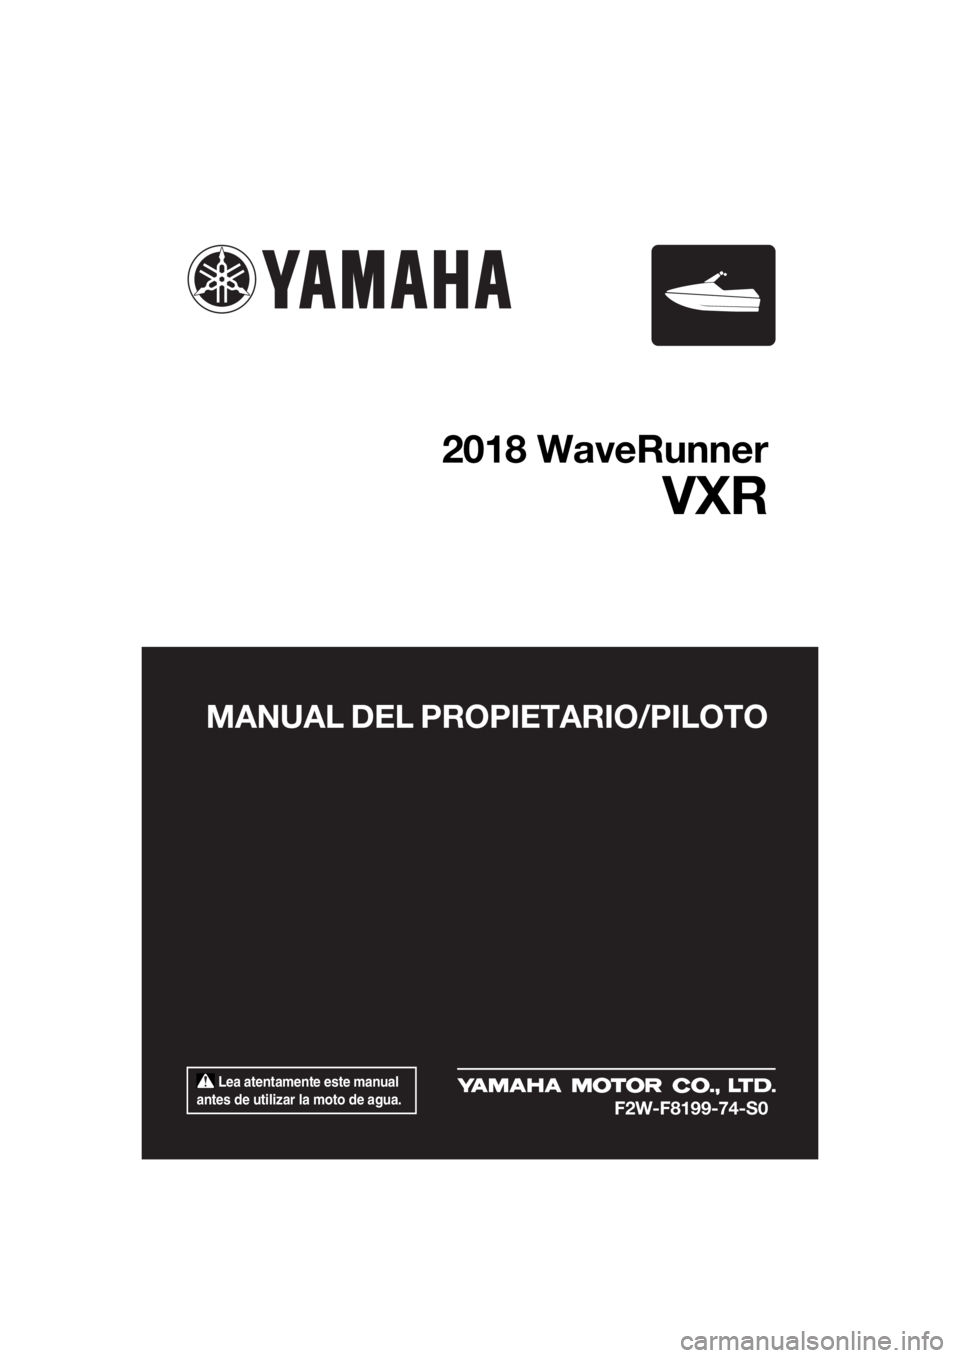 YAMAHA VXR 2018  Manuale de Empleo (in Spanish)  Lea atentamente este manual 
antes de utilizar la moto de agua.
MANUAL DEL PROPIETARIO/PILOTO
2018 WaveRunner
VXR
F2W-F8199-74-S0
UF2W74S0.book  Page 1  Tuesday, June 27, 2017  3:32 PM 